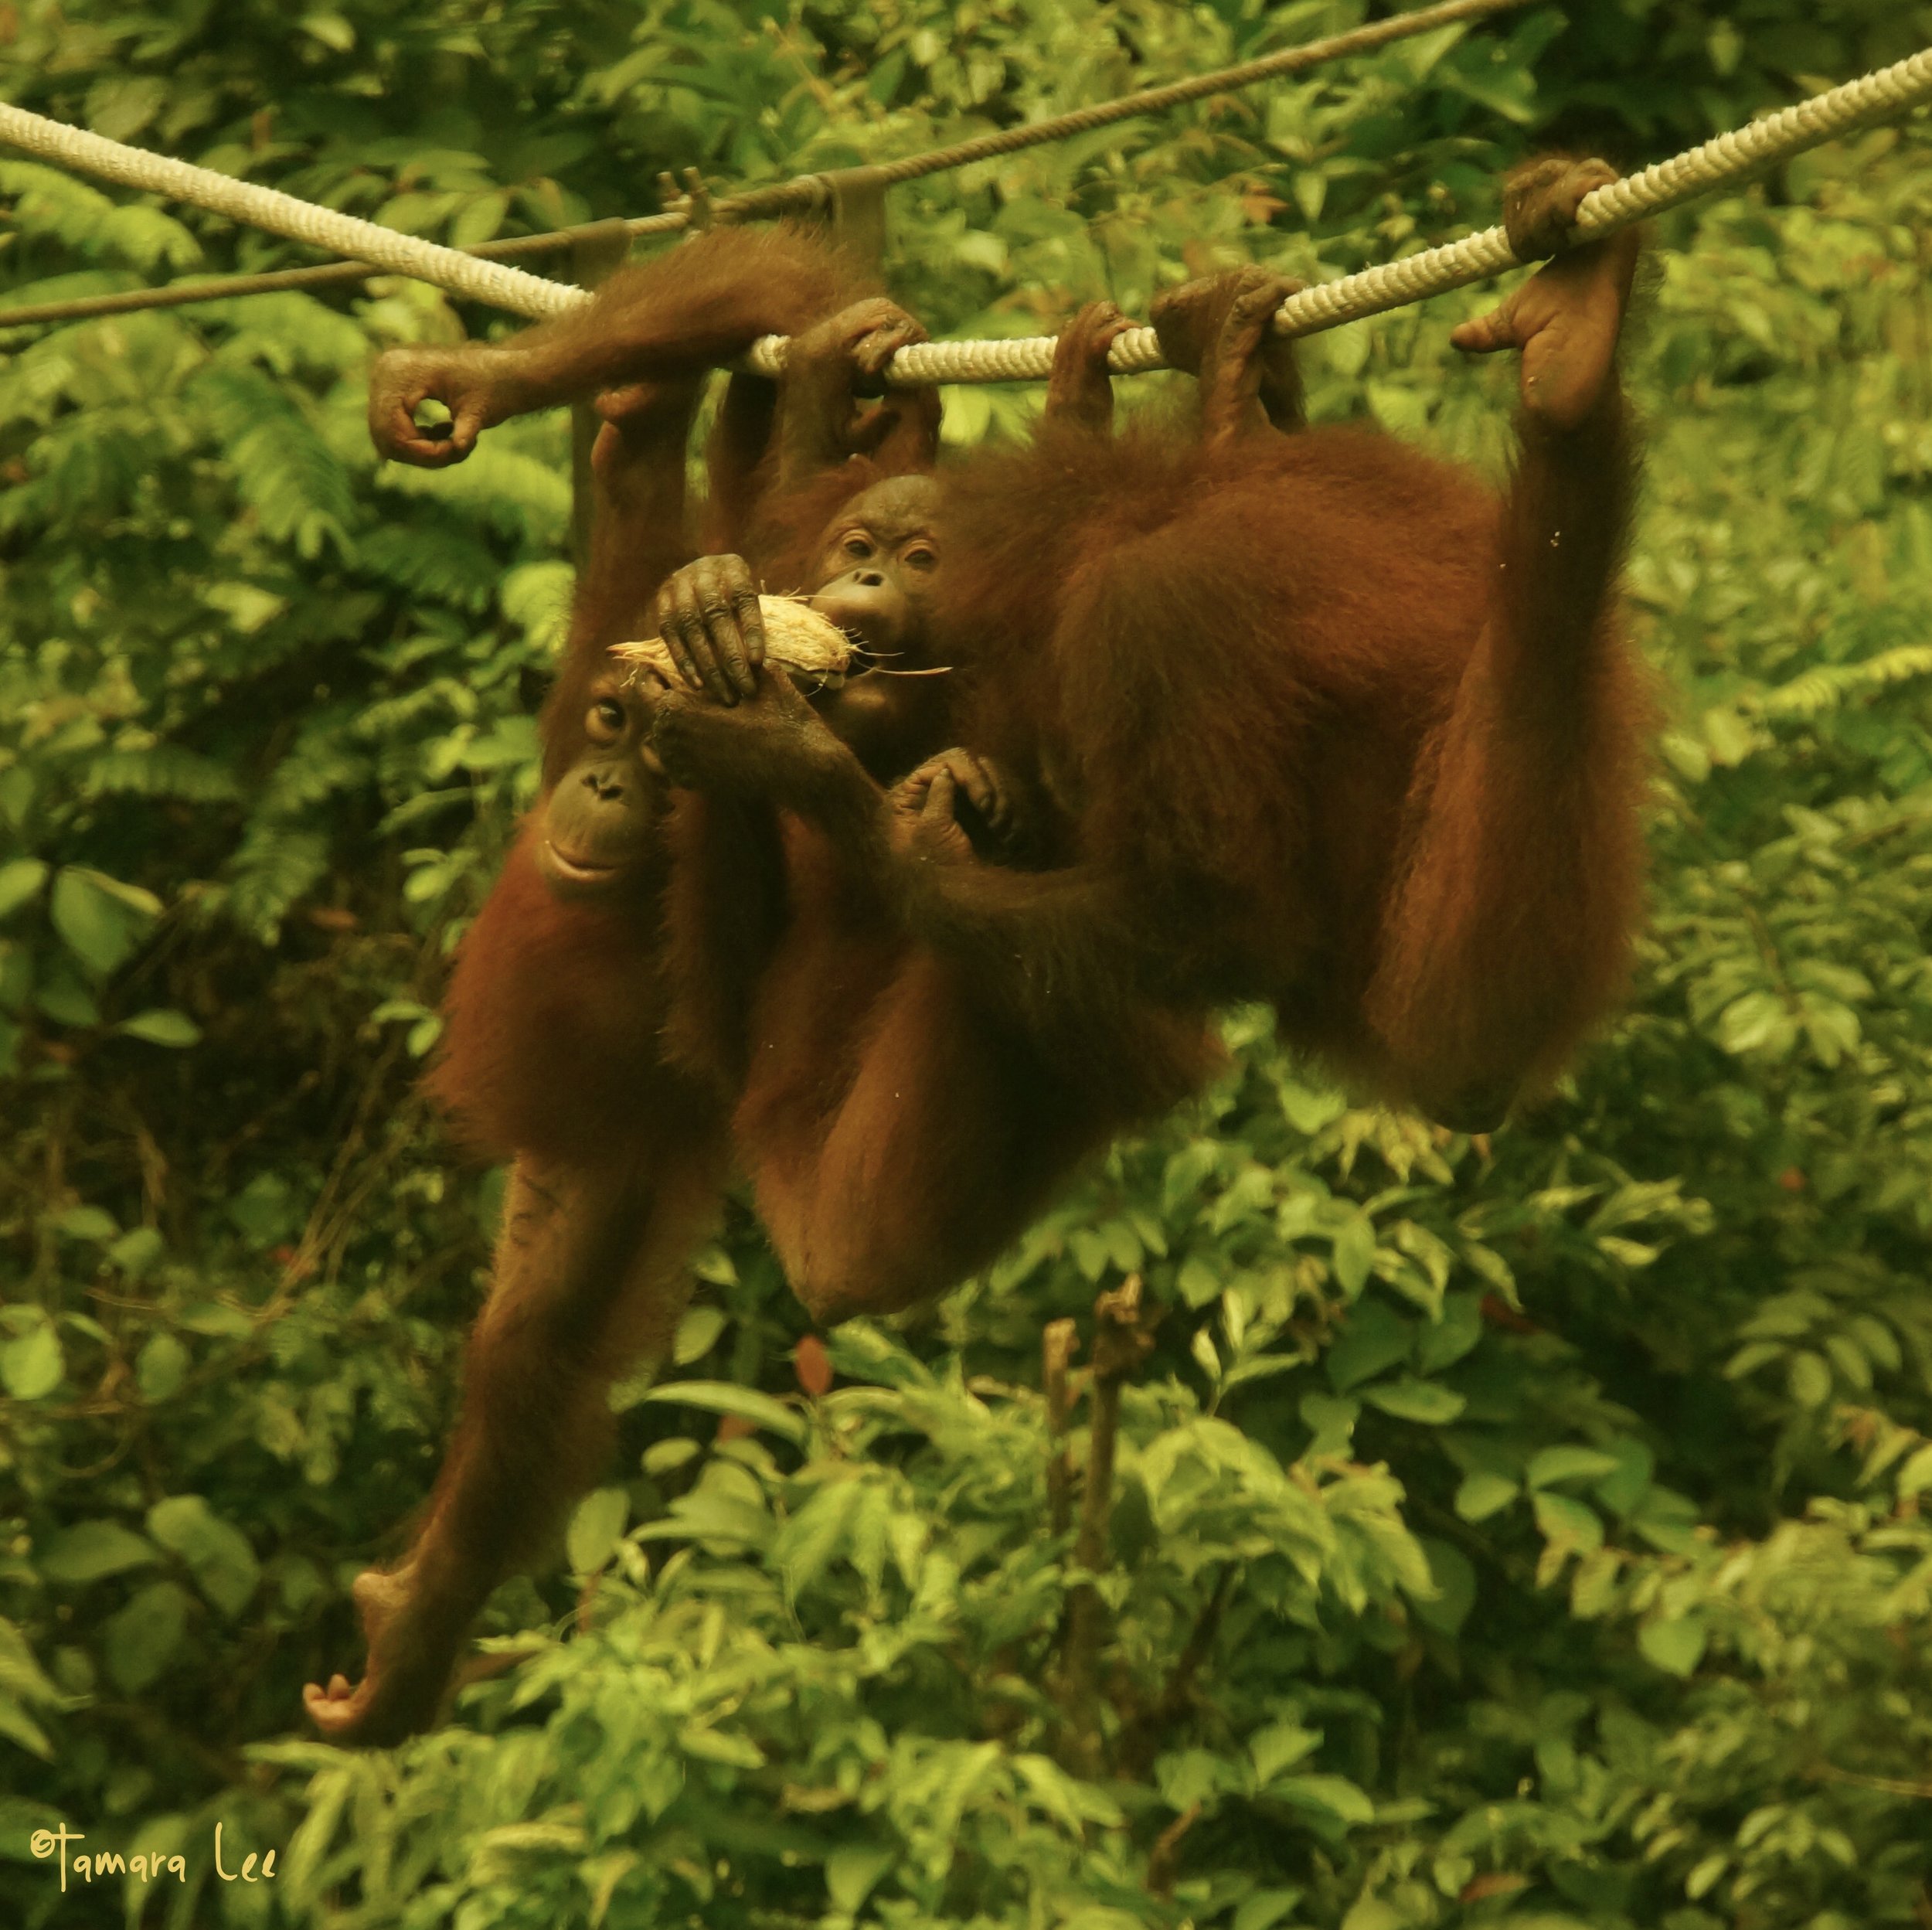 just orangutan-ing around